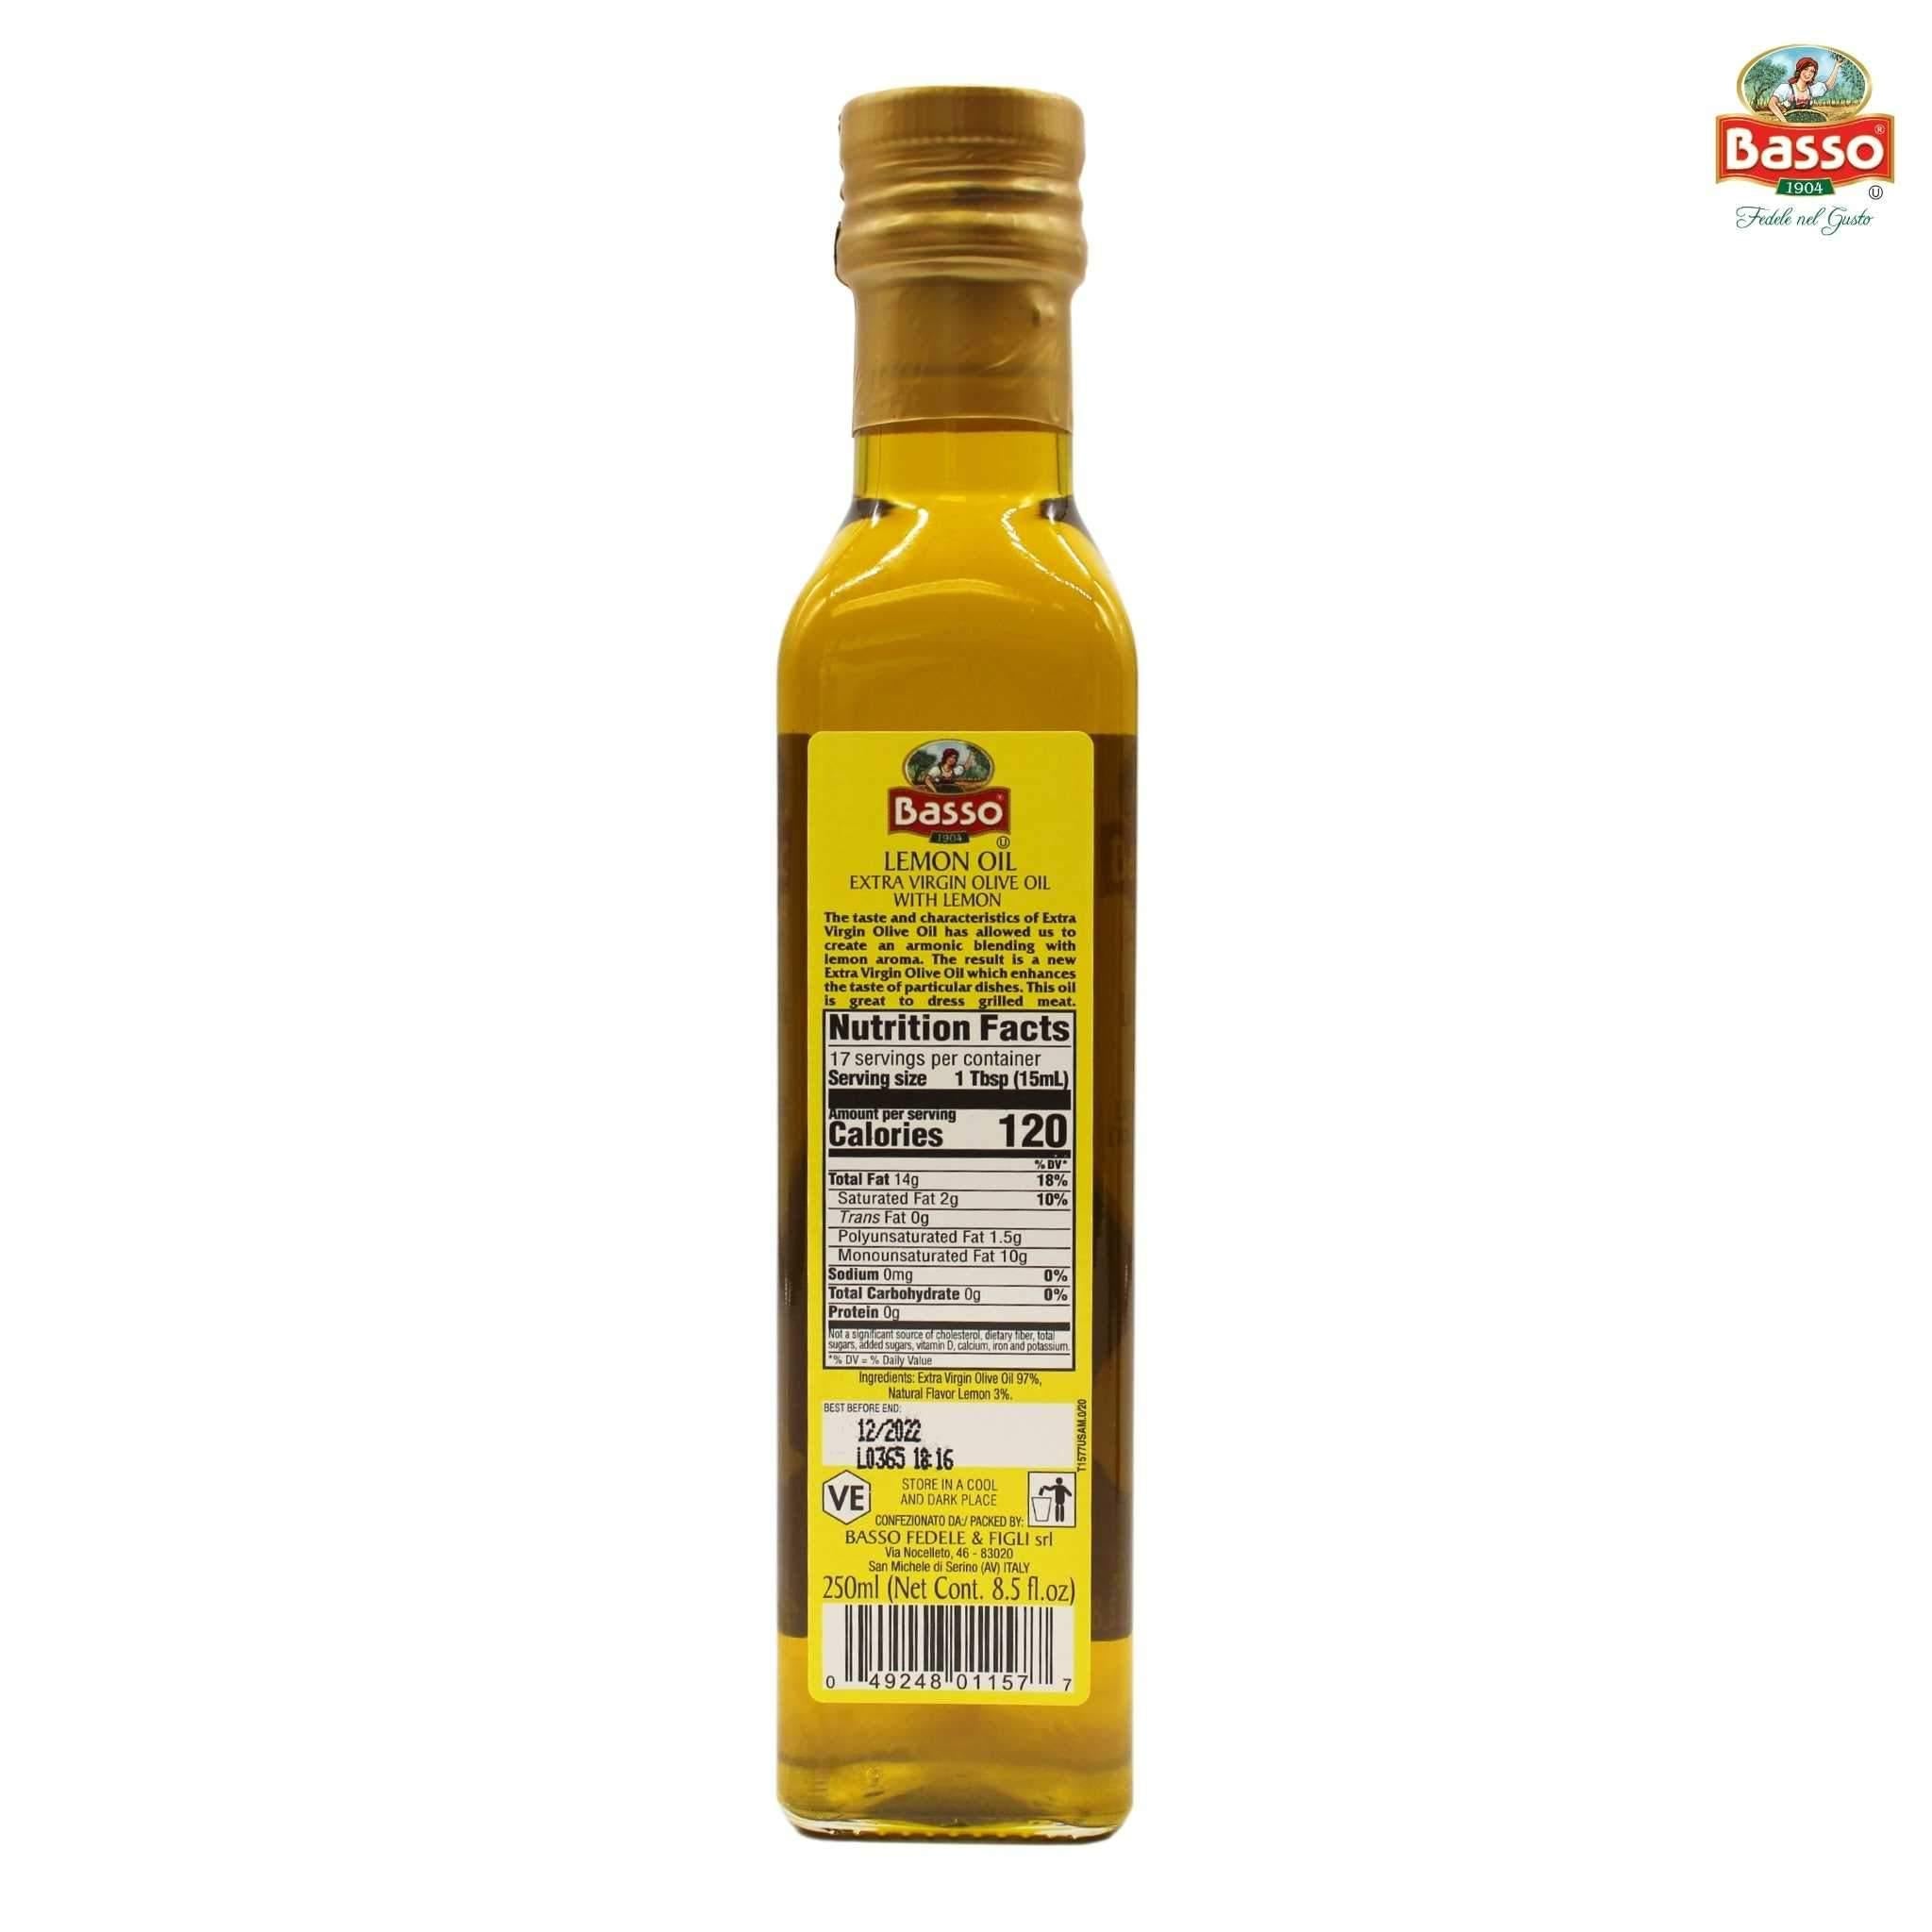 Basso Extra Virgin Olive Oil Lemon 8.5 fl oz